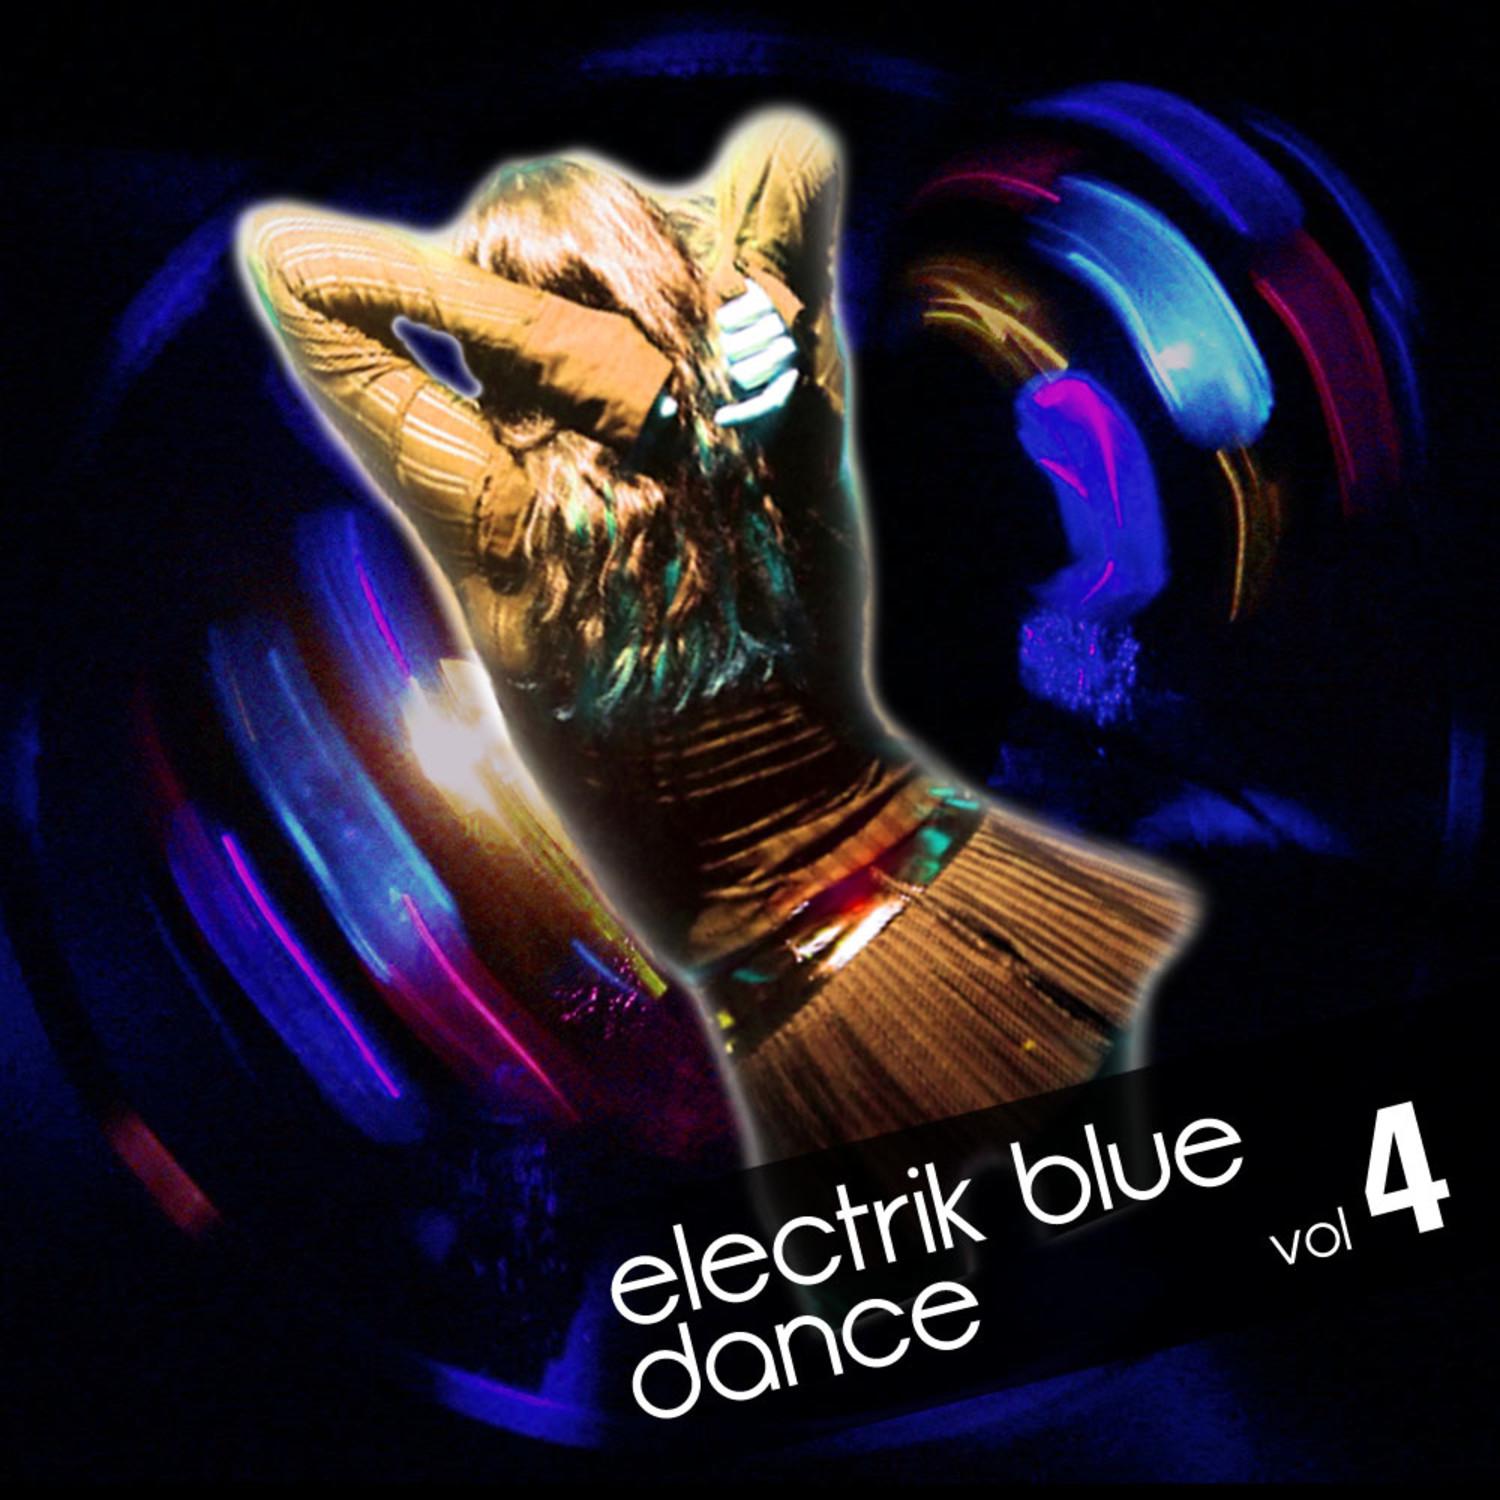 Electrik Blue Dance Vol.4